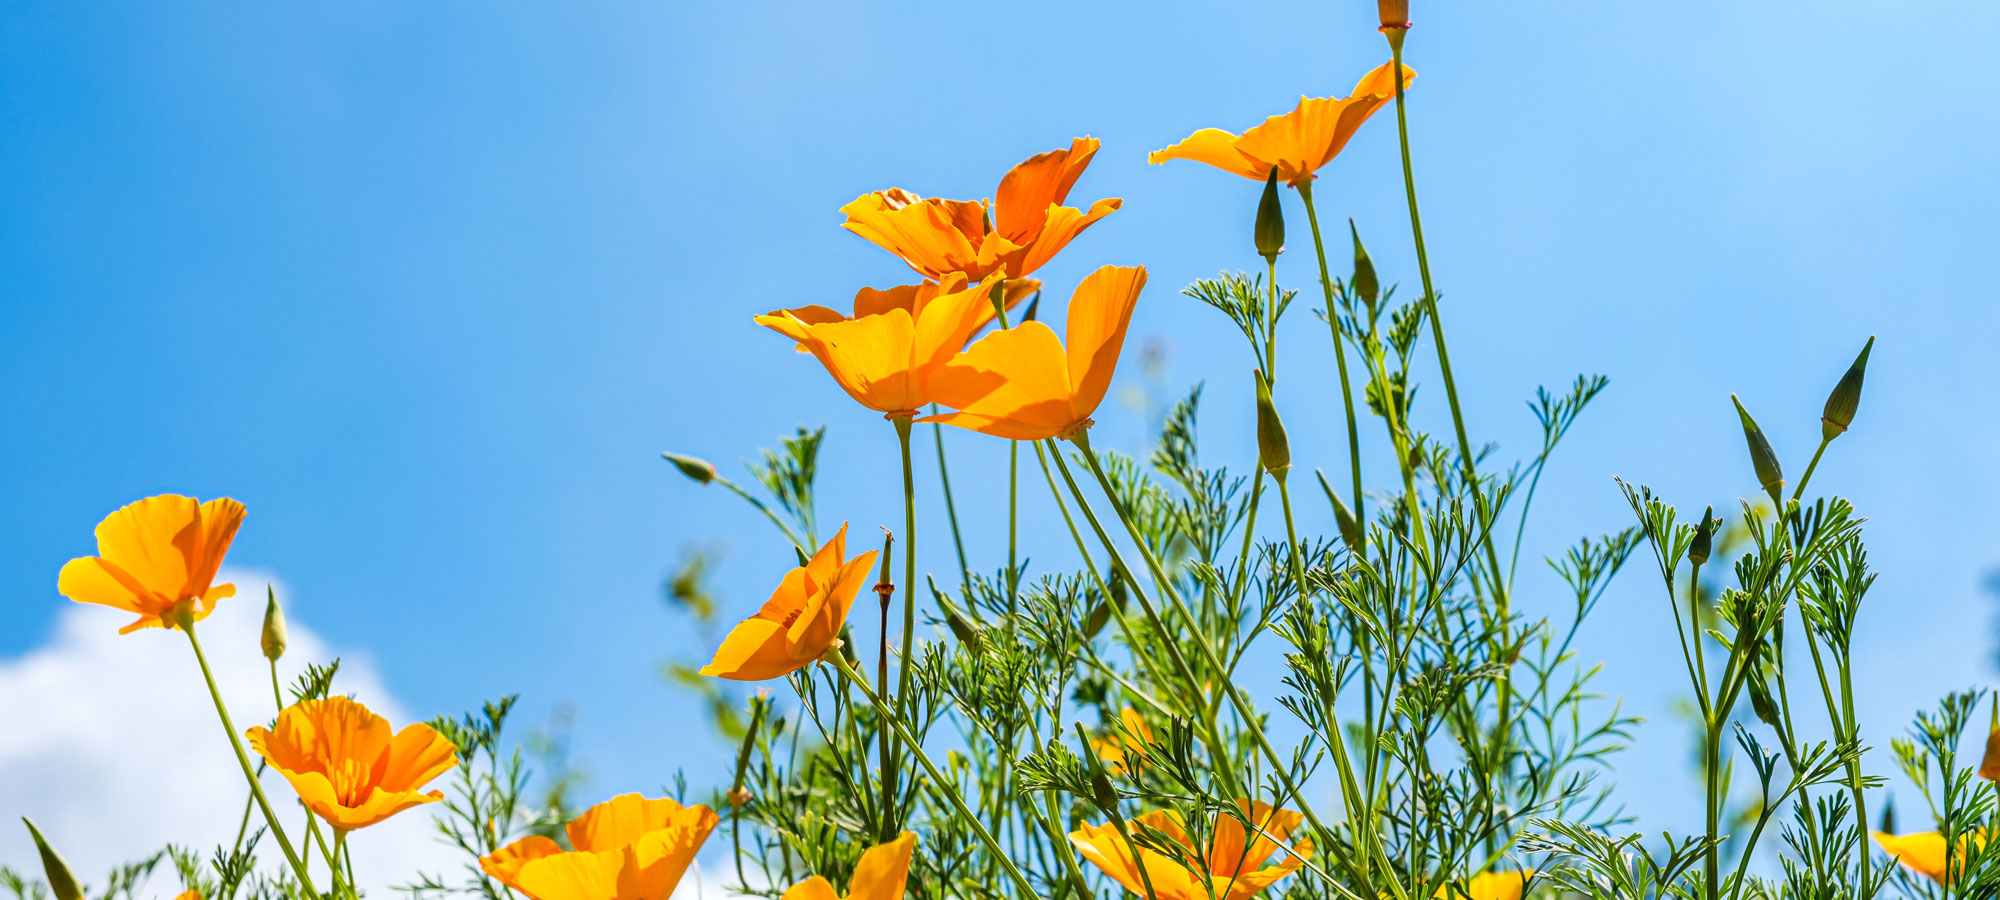 photo - California Poppies Against a Blue Sky